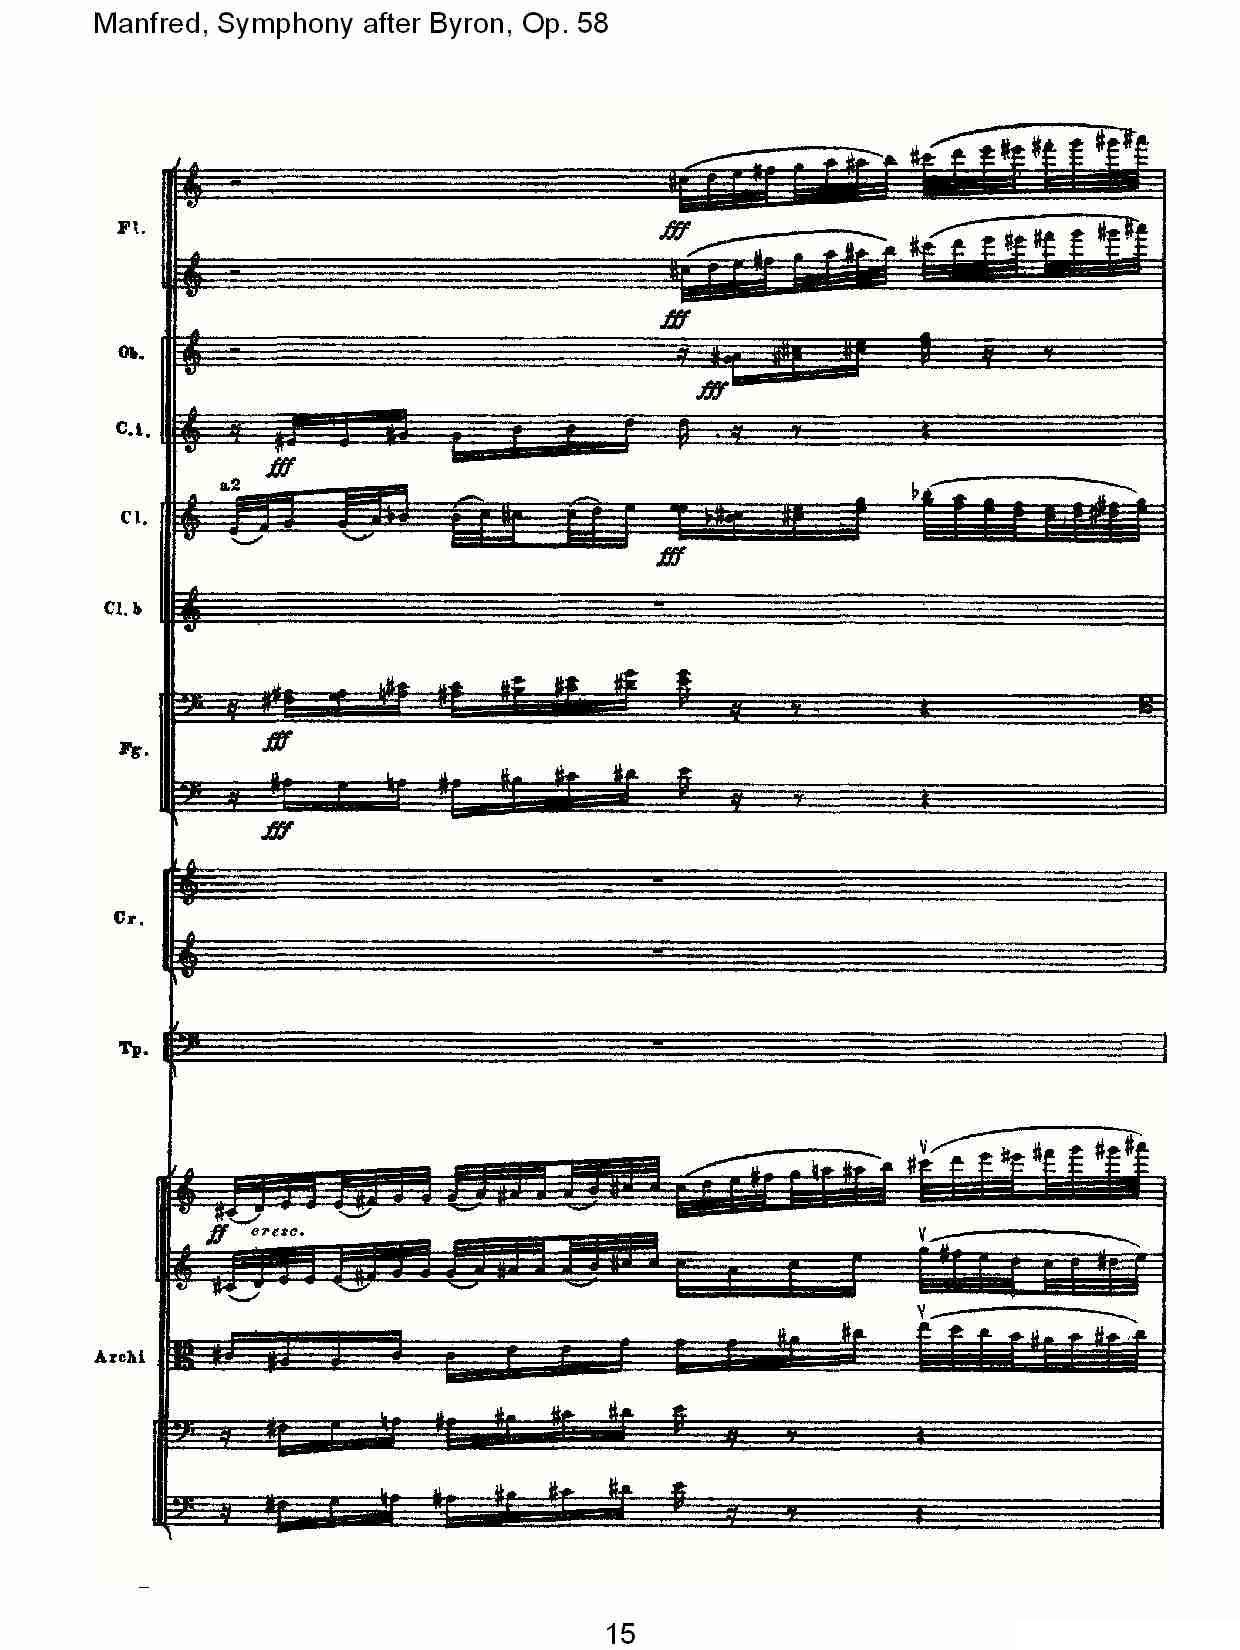 Manfred, Symphony after Byron, Op.58第一乐章（一）其它曲谱（图15）